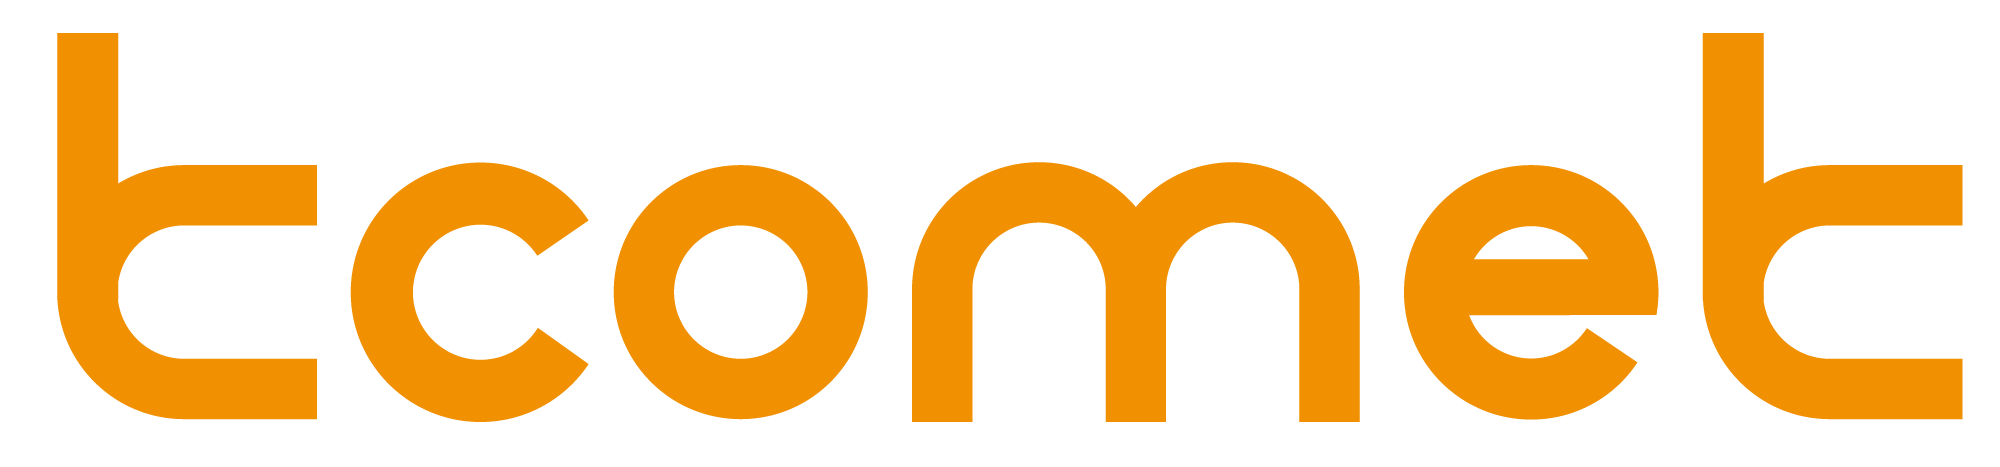 TCOMET LTD Logo